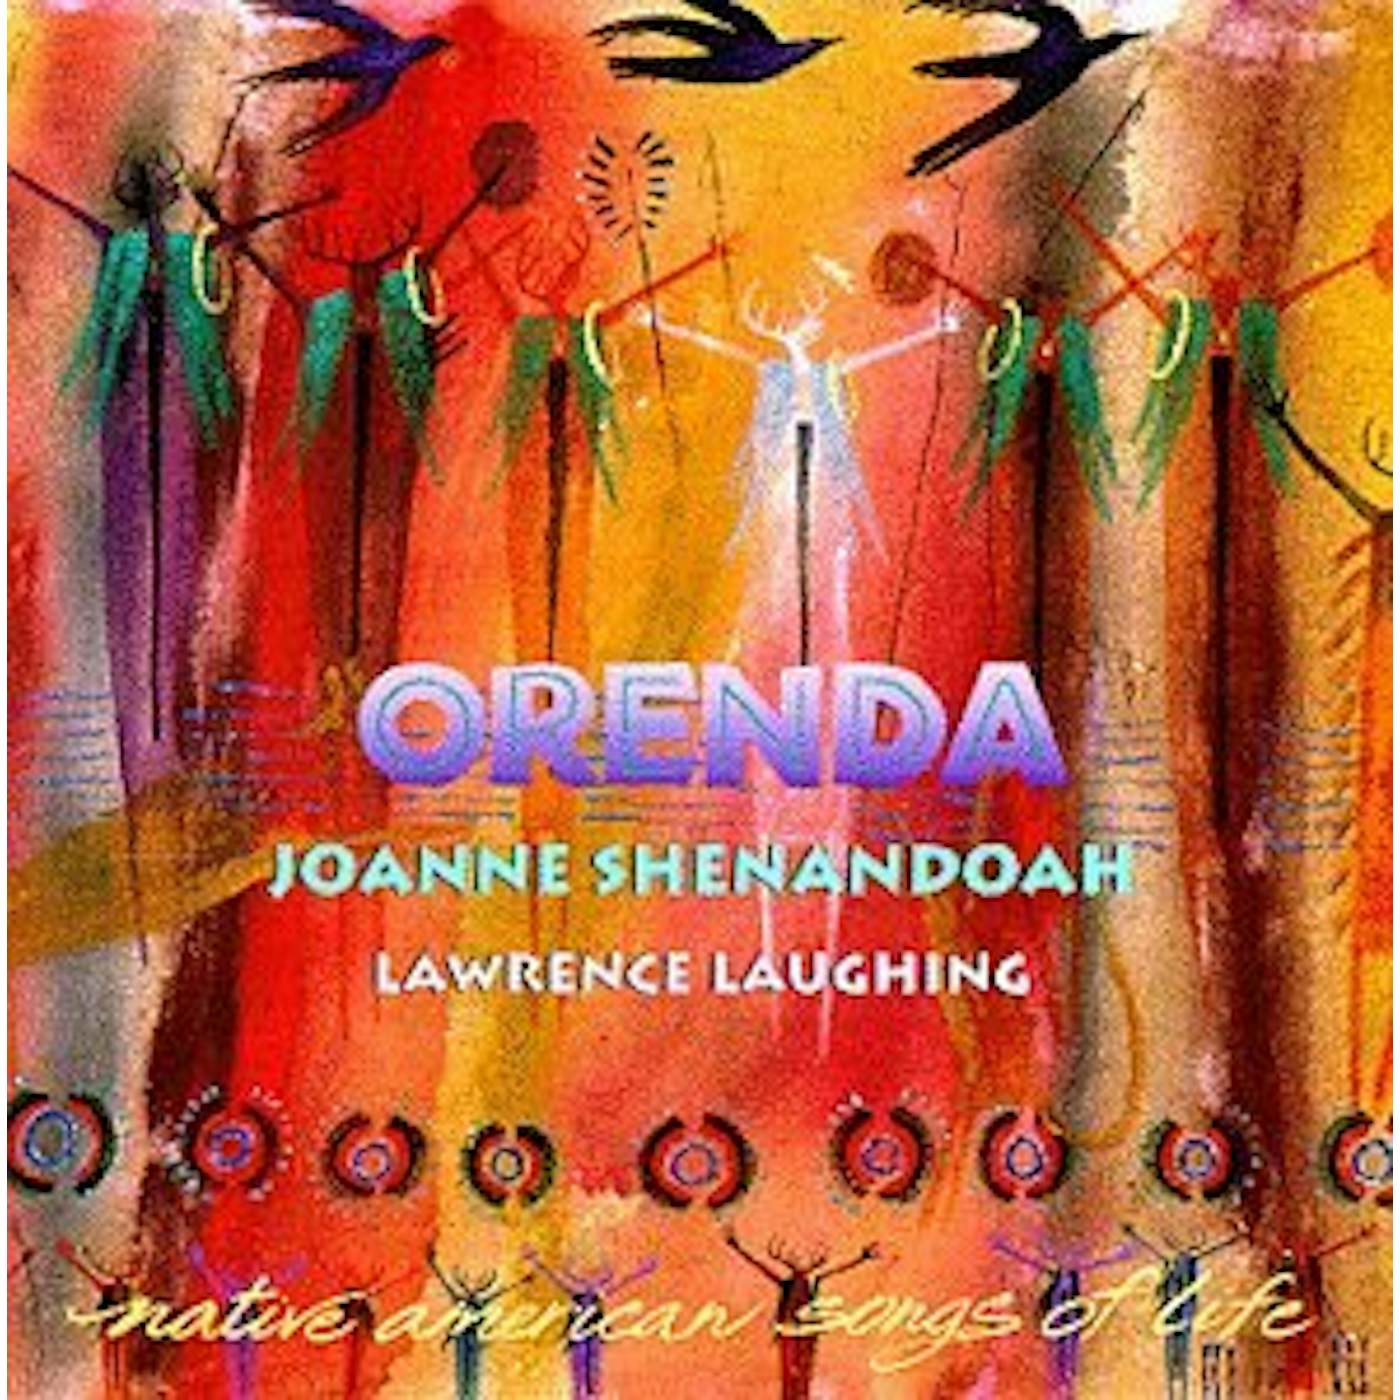 Joanne Shenandoah ORENDA CD